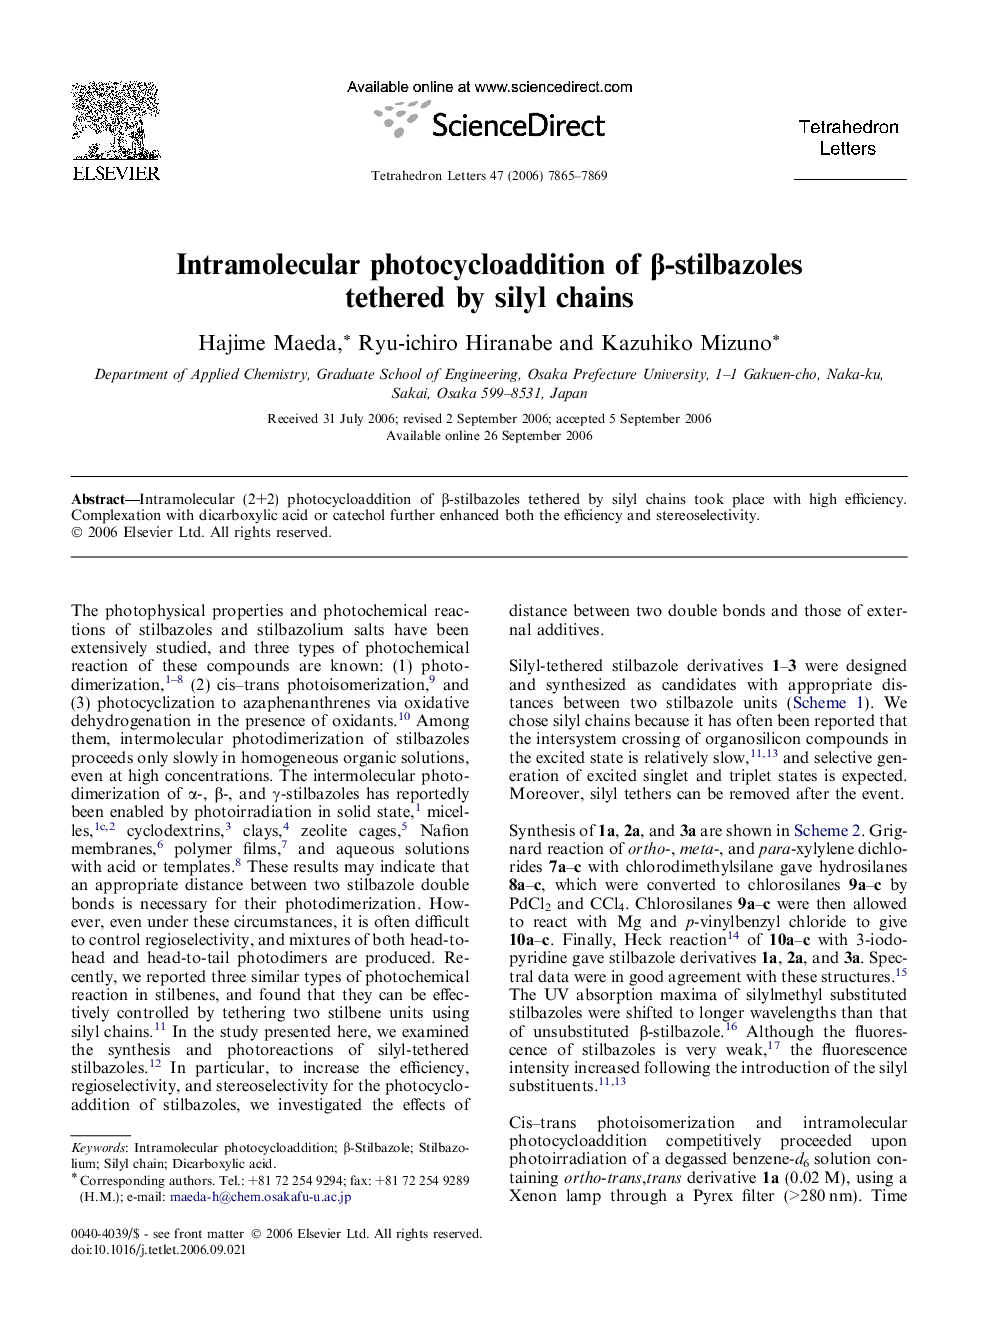 Intramolecular photocycloaddition of Î²-stilbazoles tethered by silyl chains